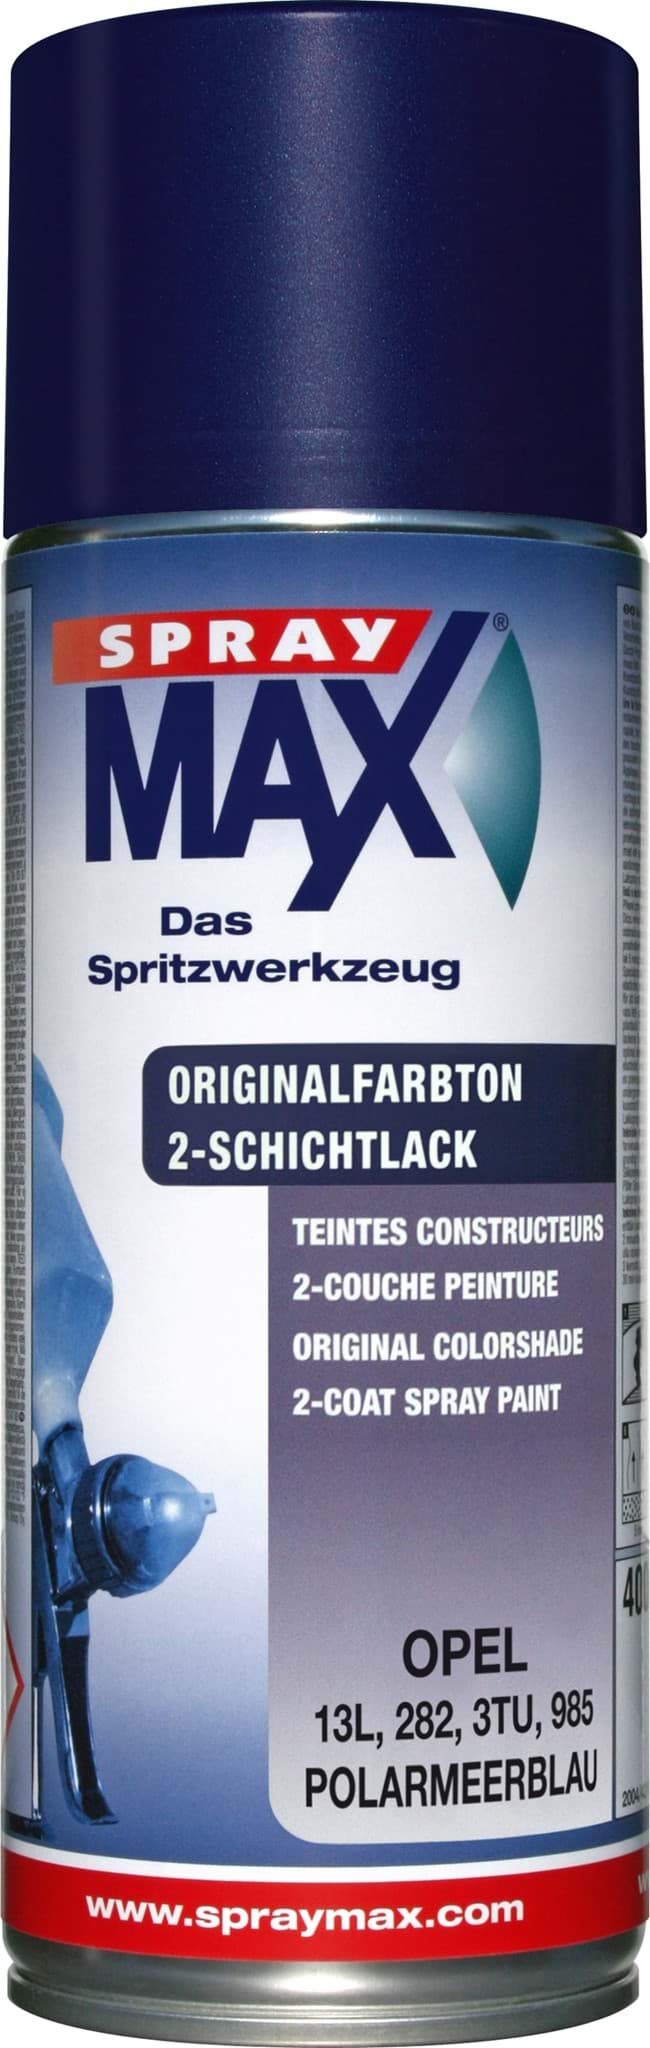 SprayMax Originalfarbton für Opel 282 polarmeerblau resmi